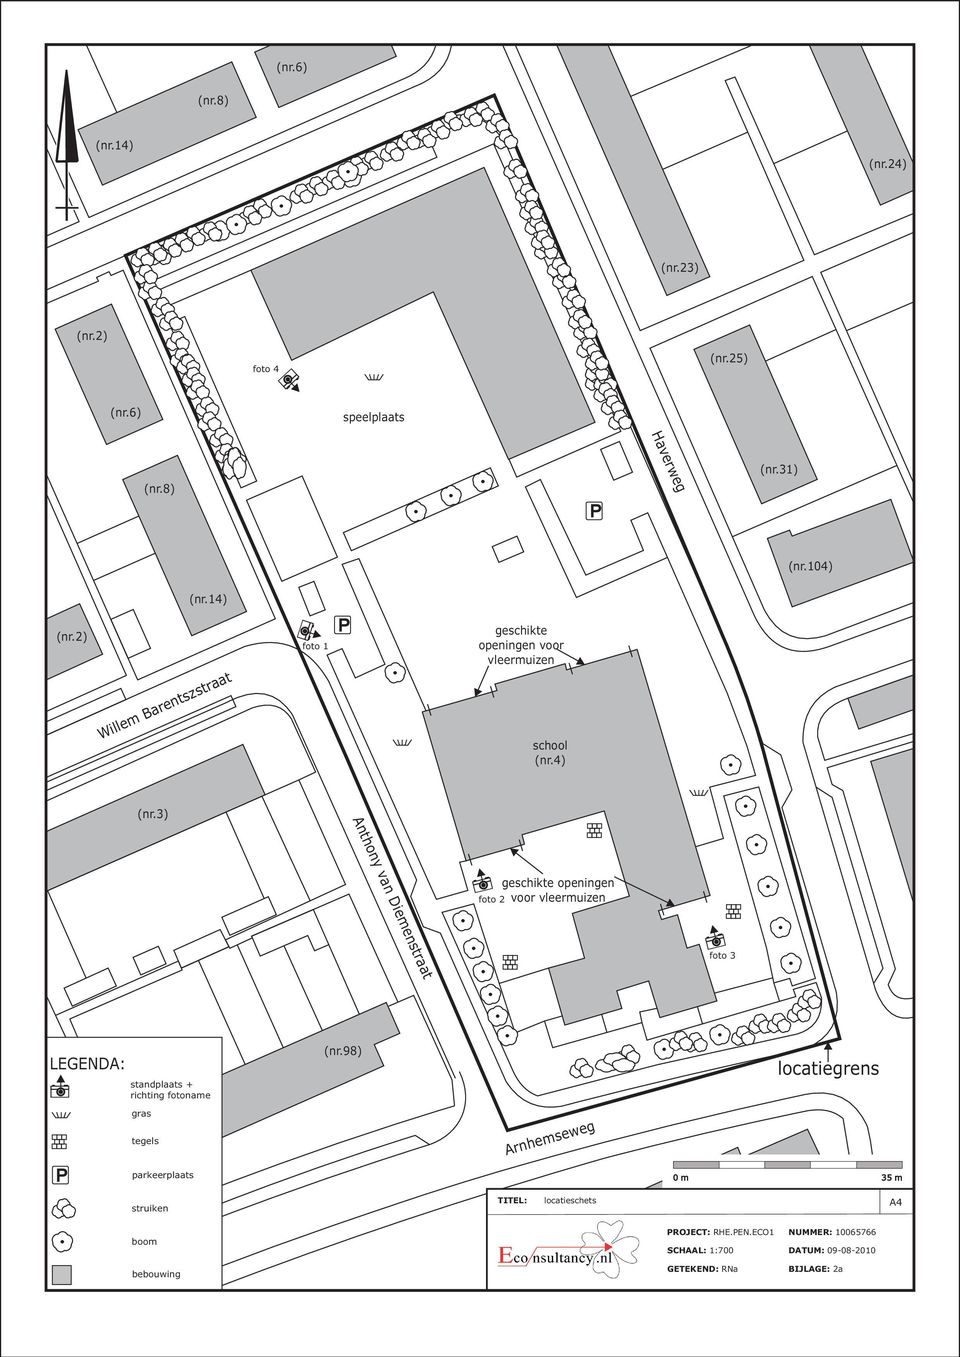 98) locatiegrens gras tegels Arnhemseweg P parkeerplaats 0 m 35 m struiken TITEL: locatieschets A4 boom PROJECT: RHE.PEN.